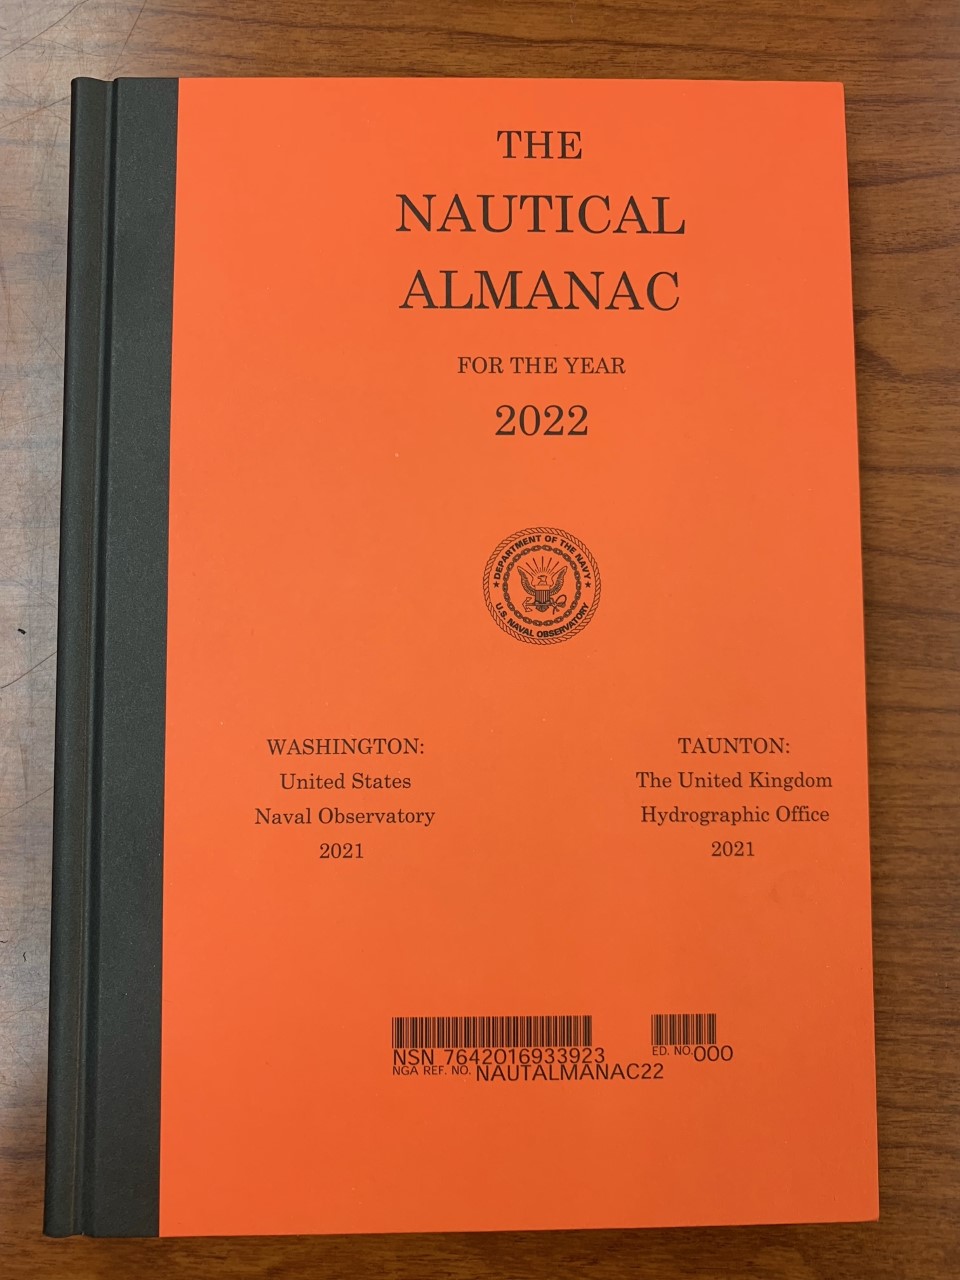 Picture of the 2022 Nautical Almanac